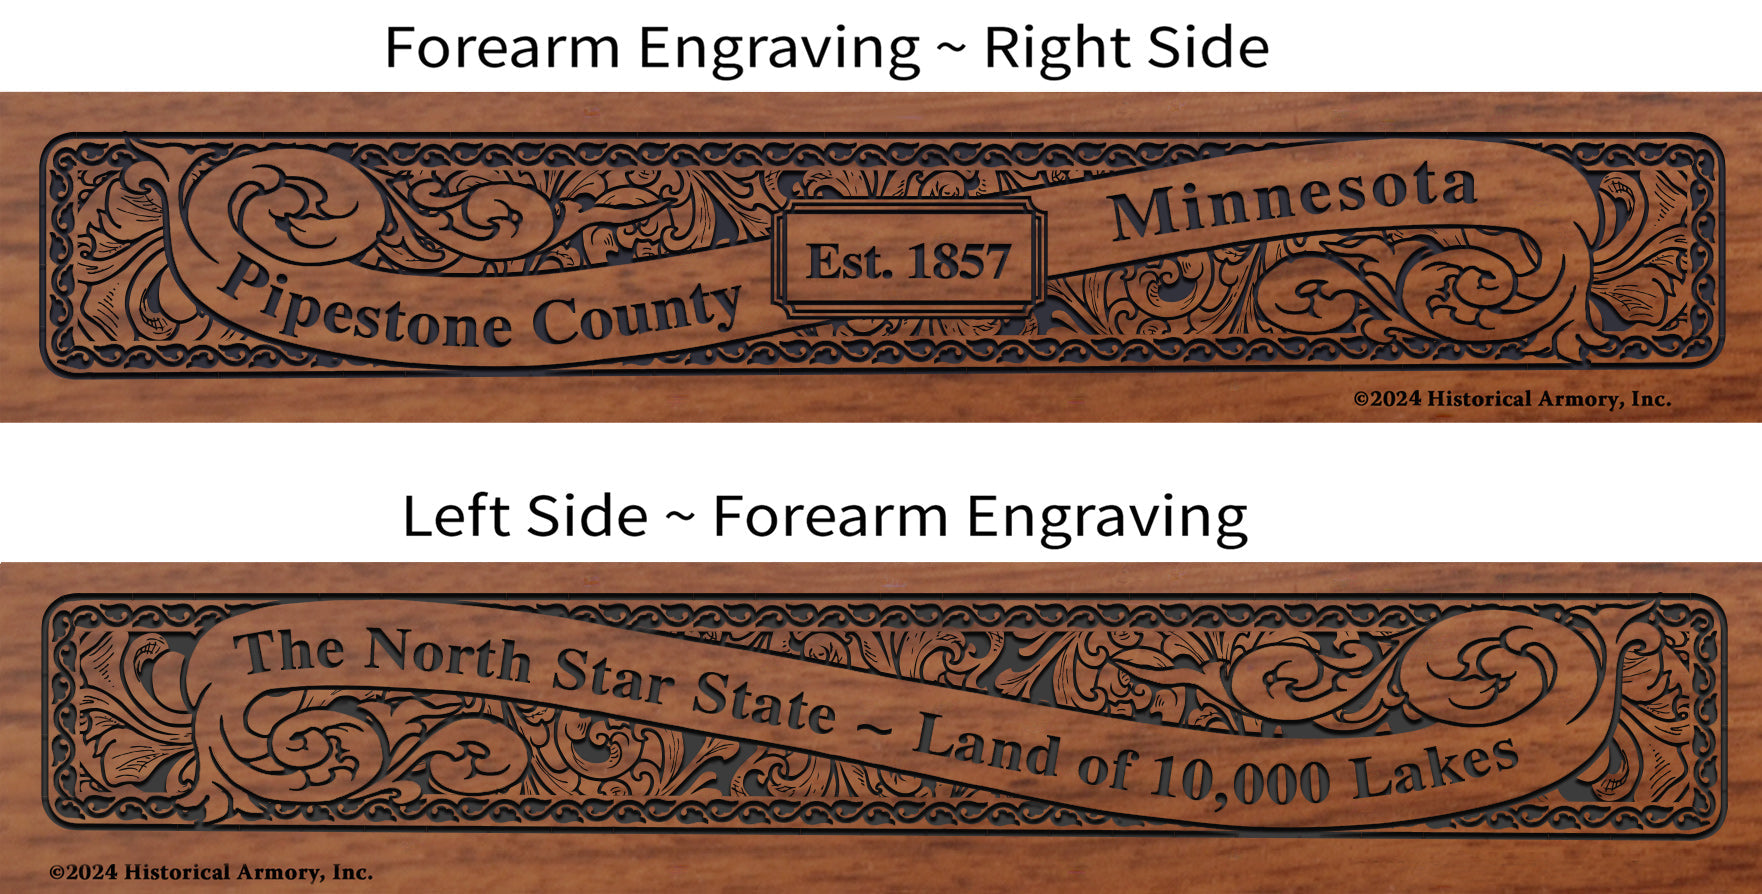 Pipestone County Minnesota Engraved Rifle Forearm